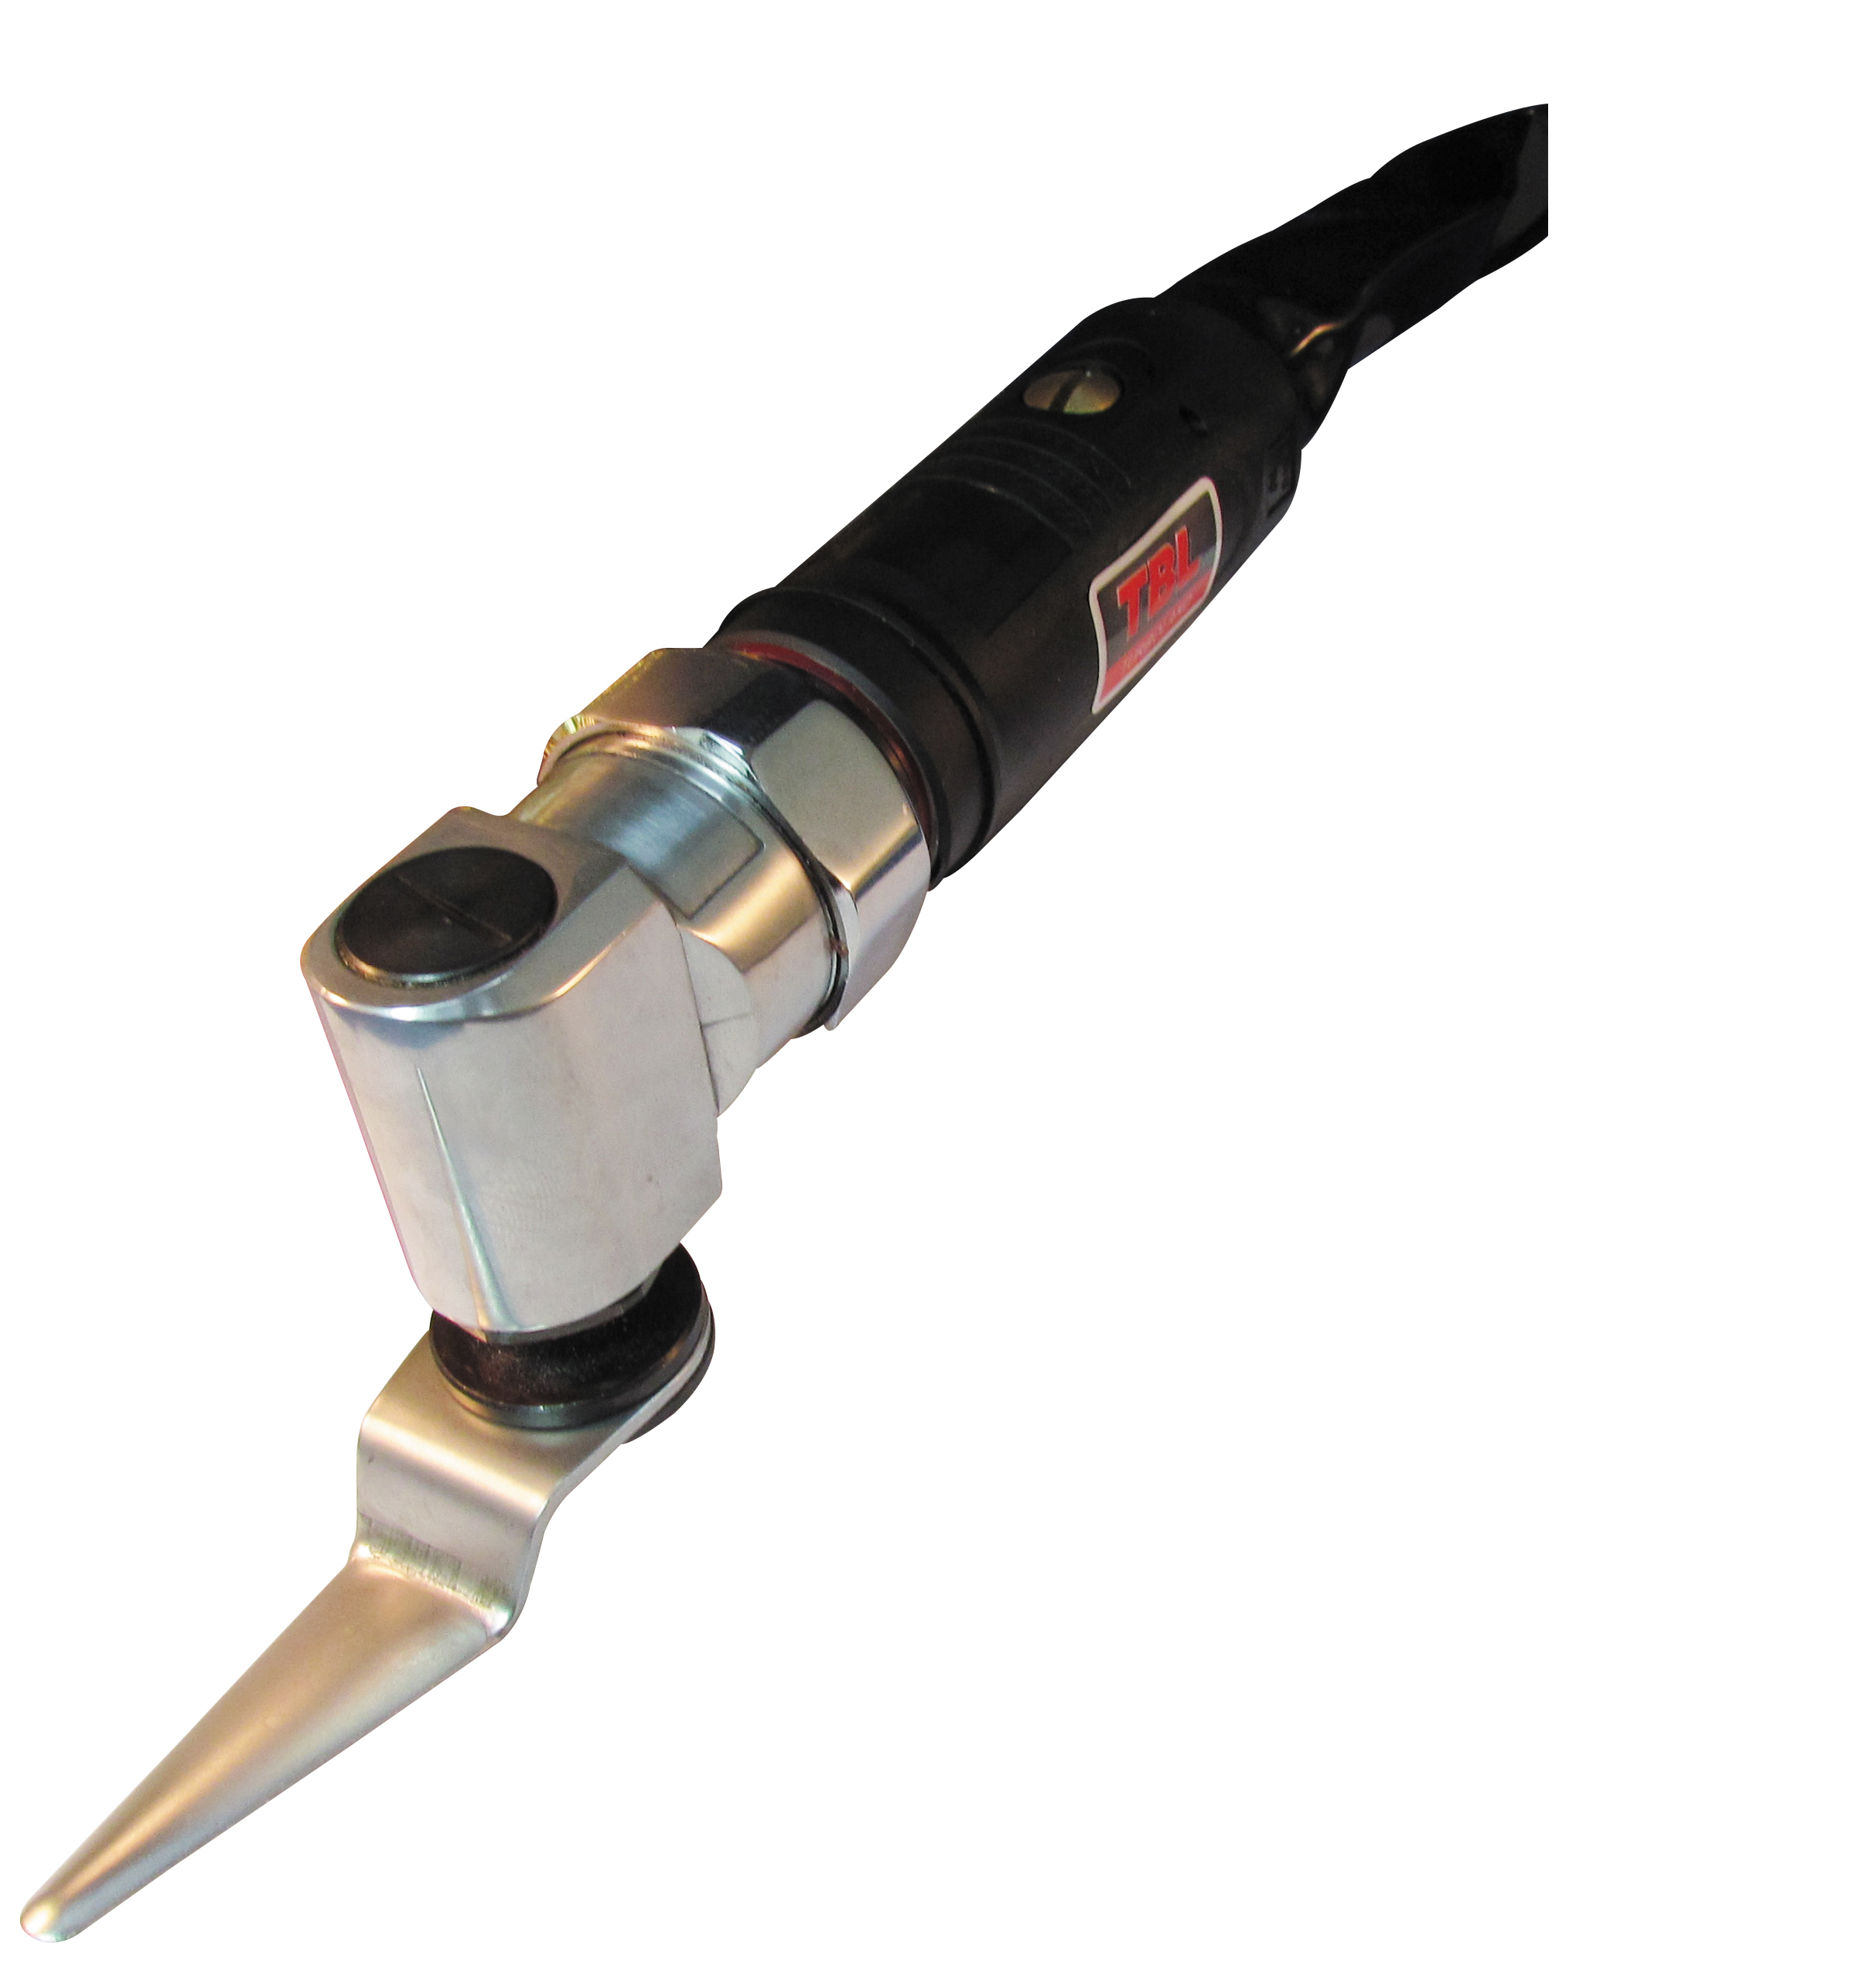 Industrial Machine / Equipment Air Knife for Pneumatic (Air) Tools made by TBL Leadvane Industrial Co., Ltd  利釩股份有限公司 - MatchSupplier.com